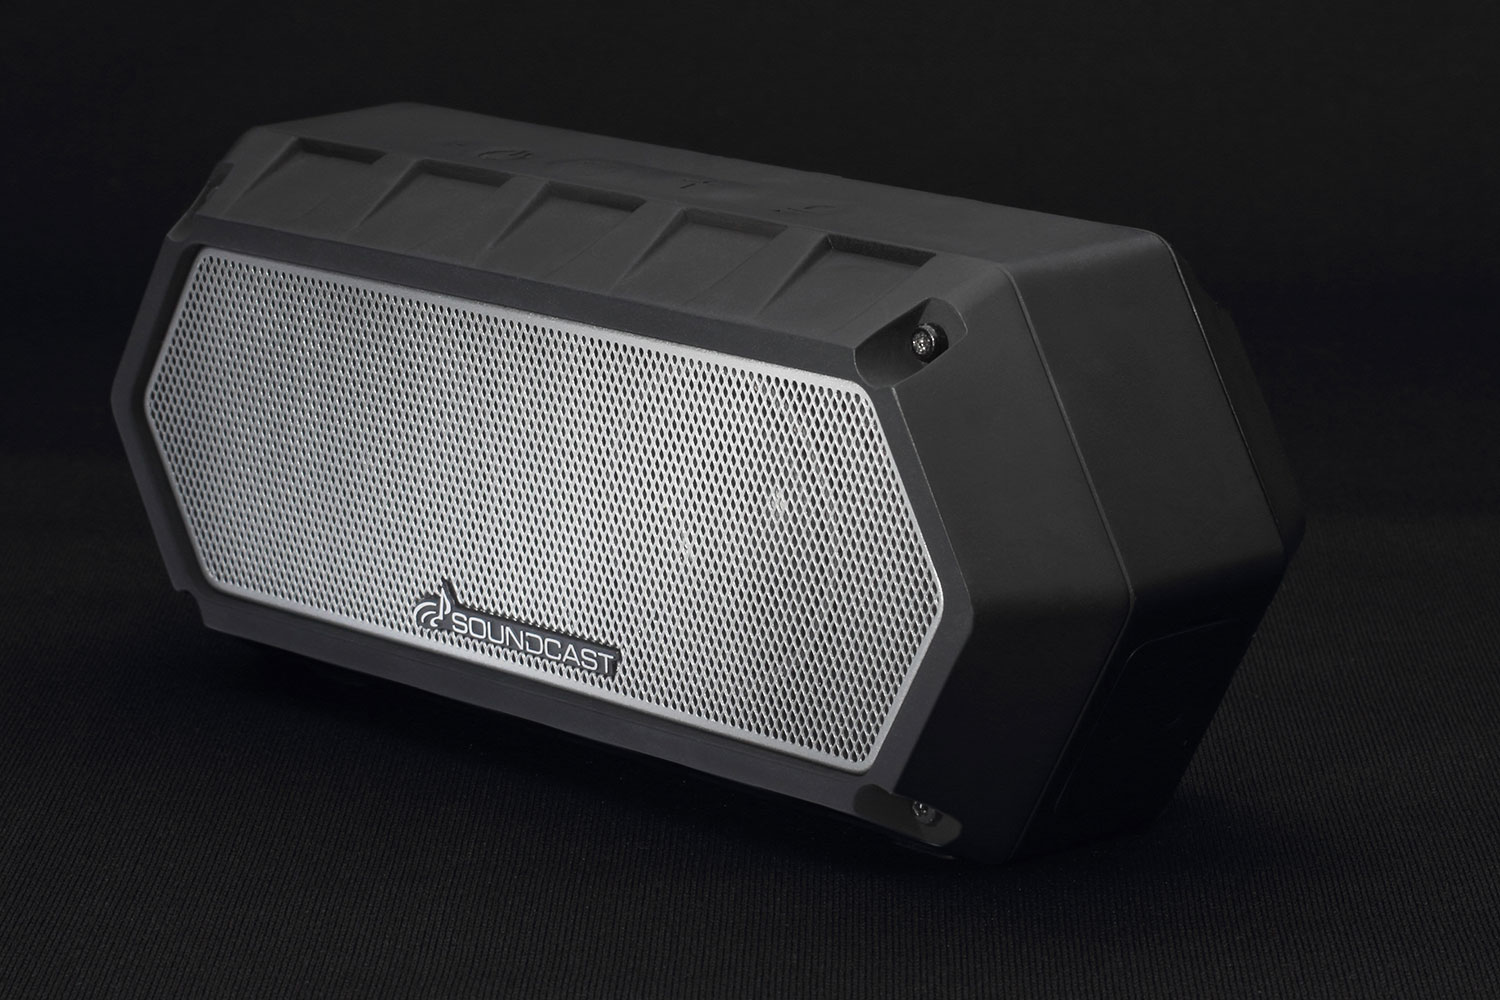 soundcast vg 1 waterproof bluetooth speaker announced 2